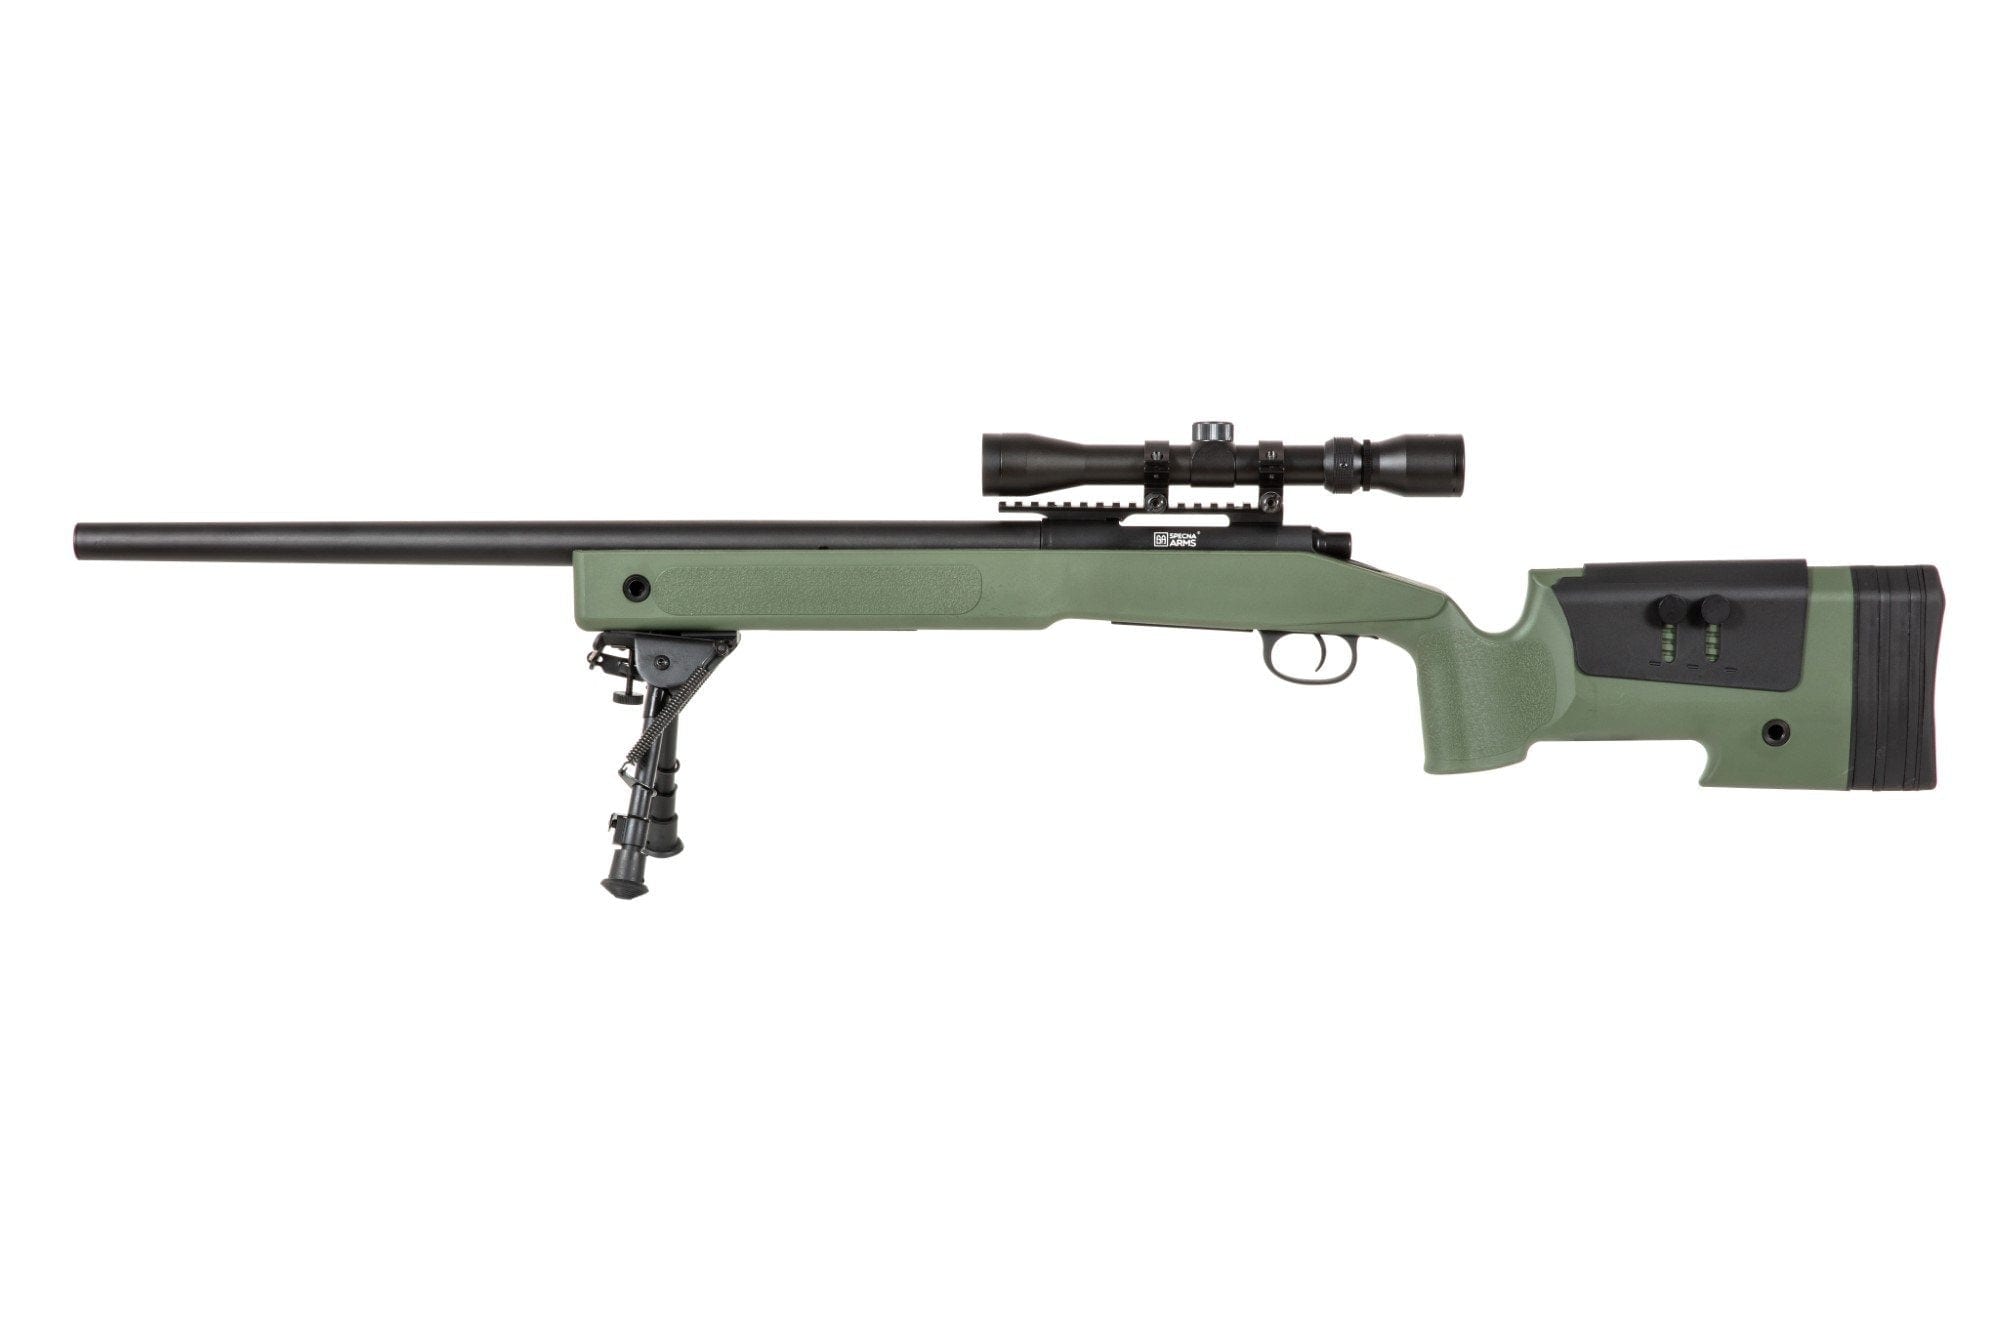 SA-S02 CORE™ High Velocity Sniper Rifle Replica with Scope and Bipod - olive